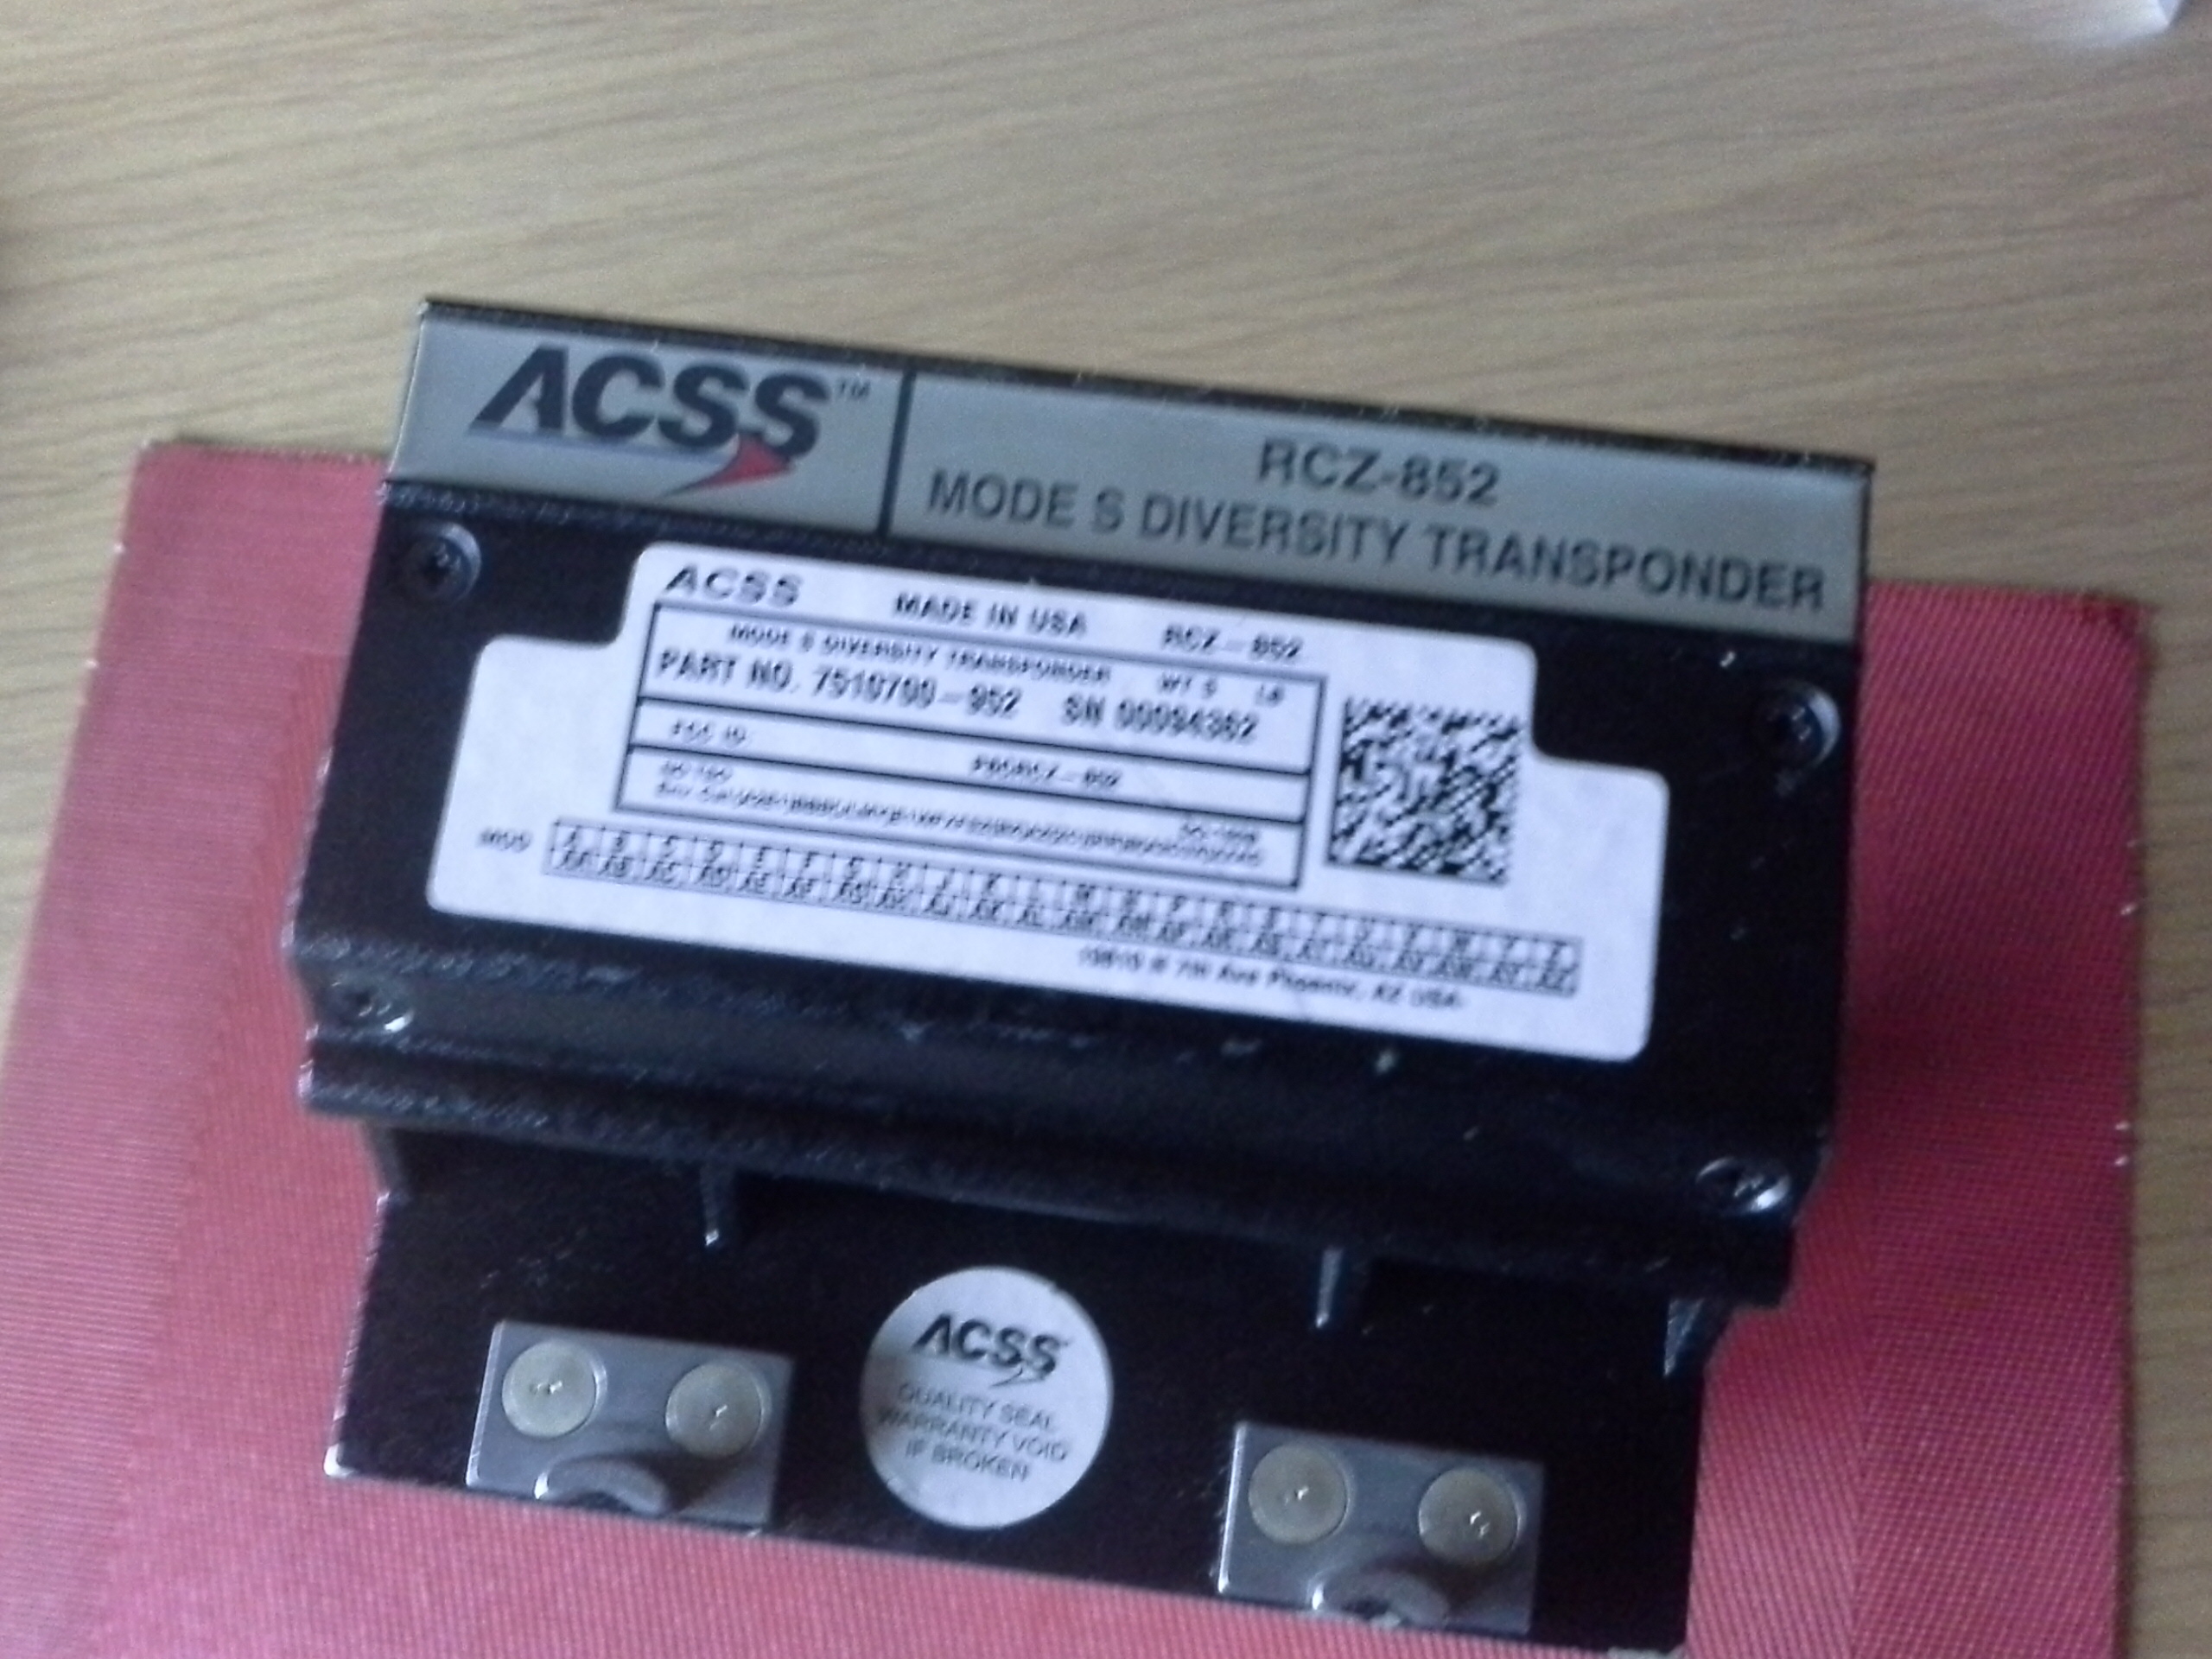 ACSS, Mode S Diversity Transponder, RCZ-852